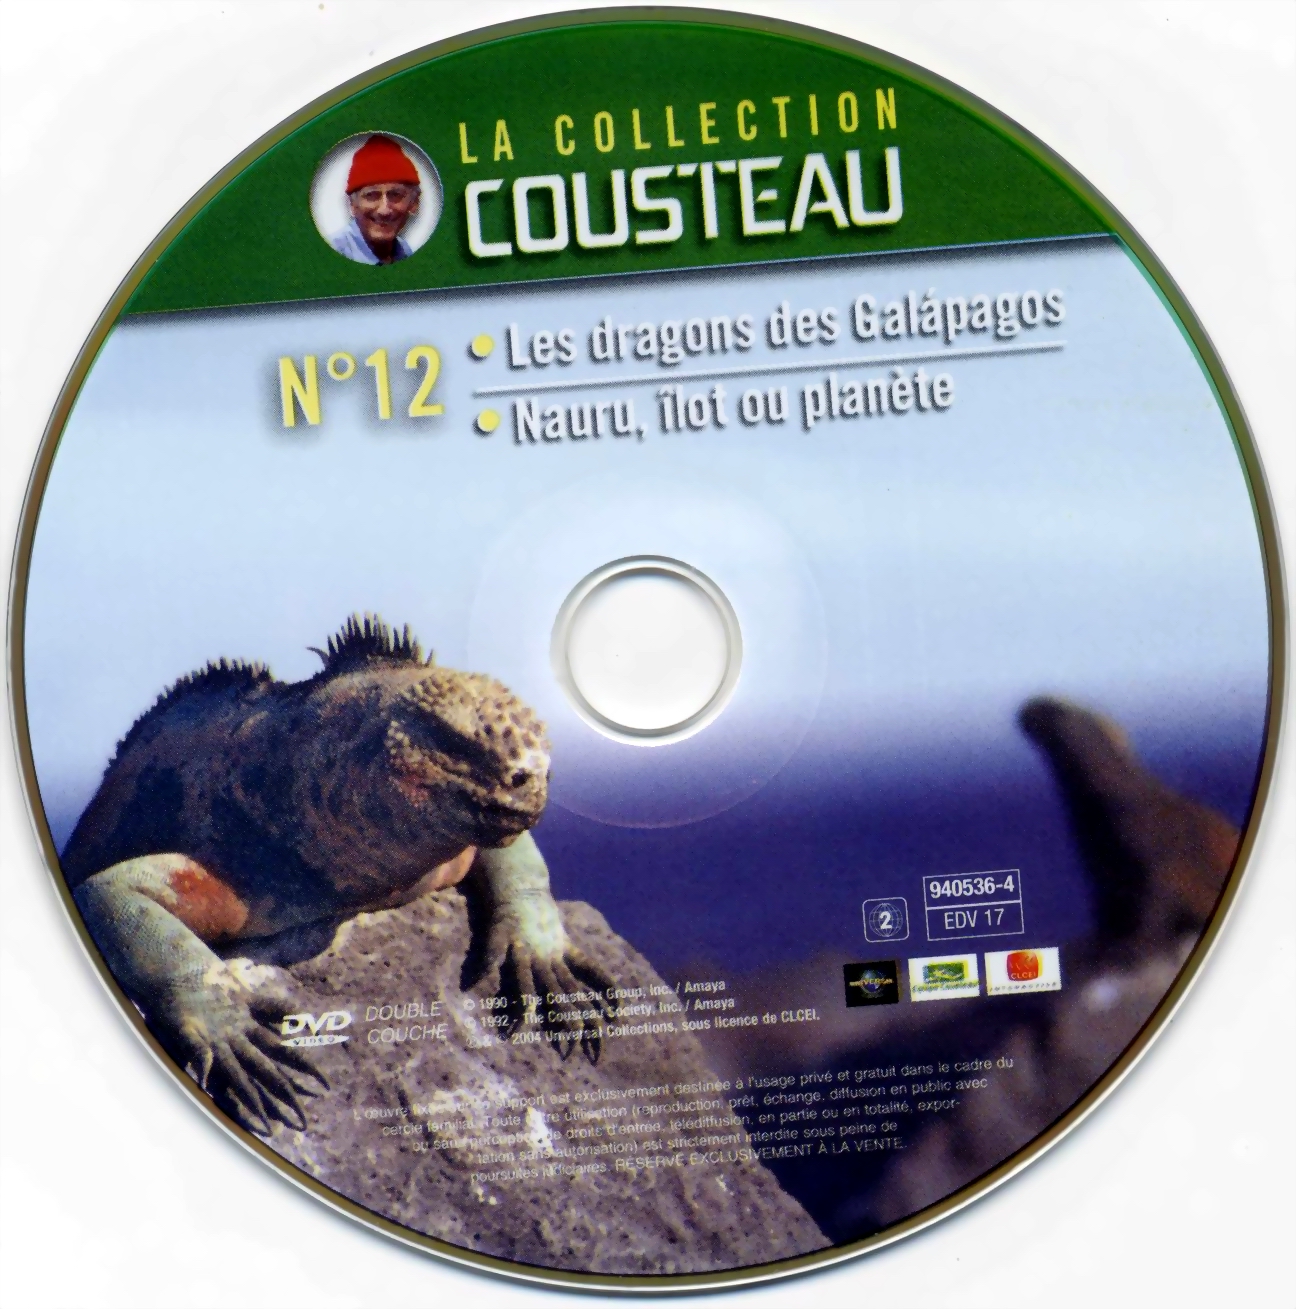 Cousteau Collection vol 12